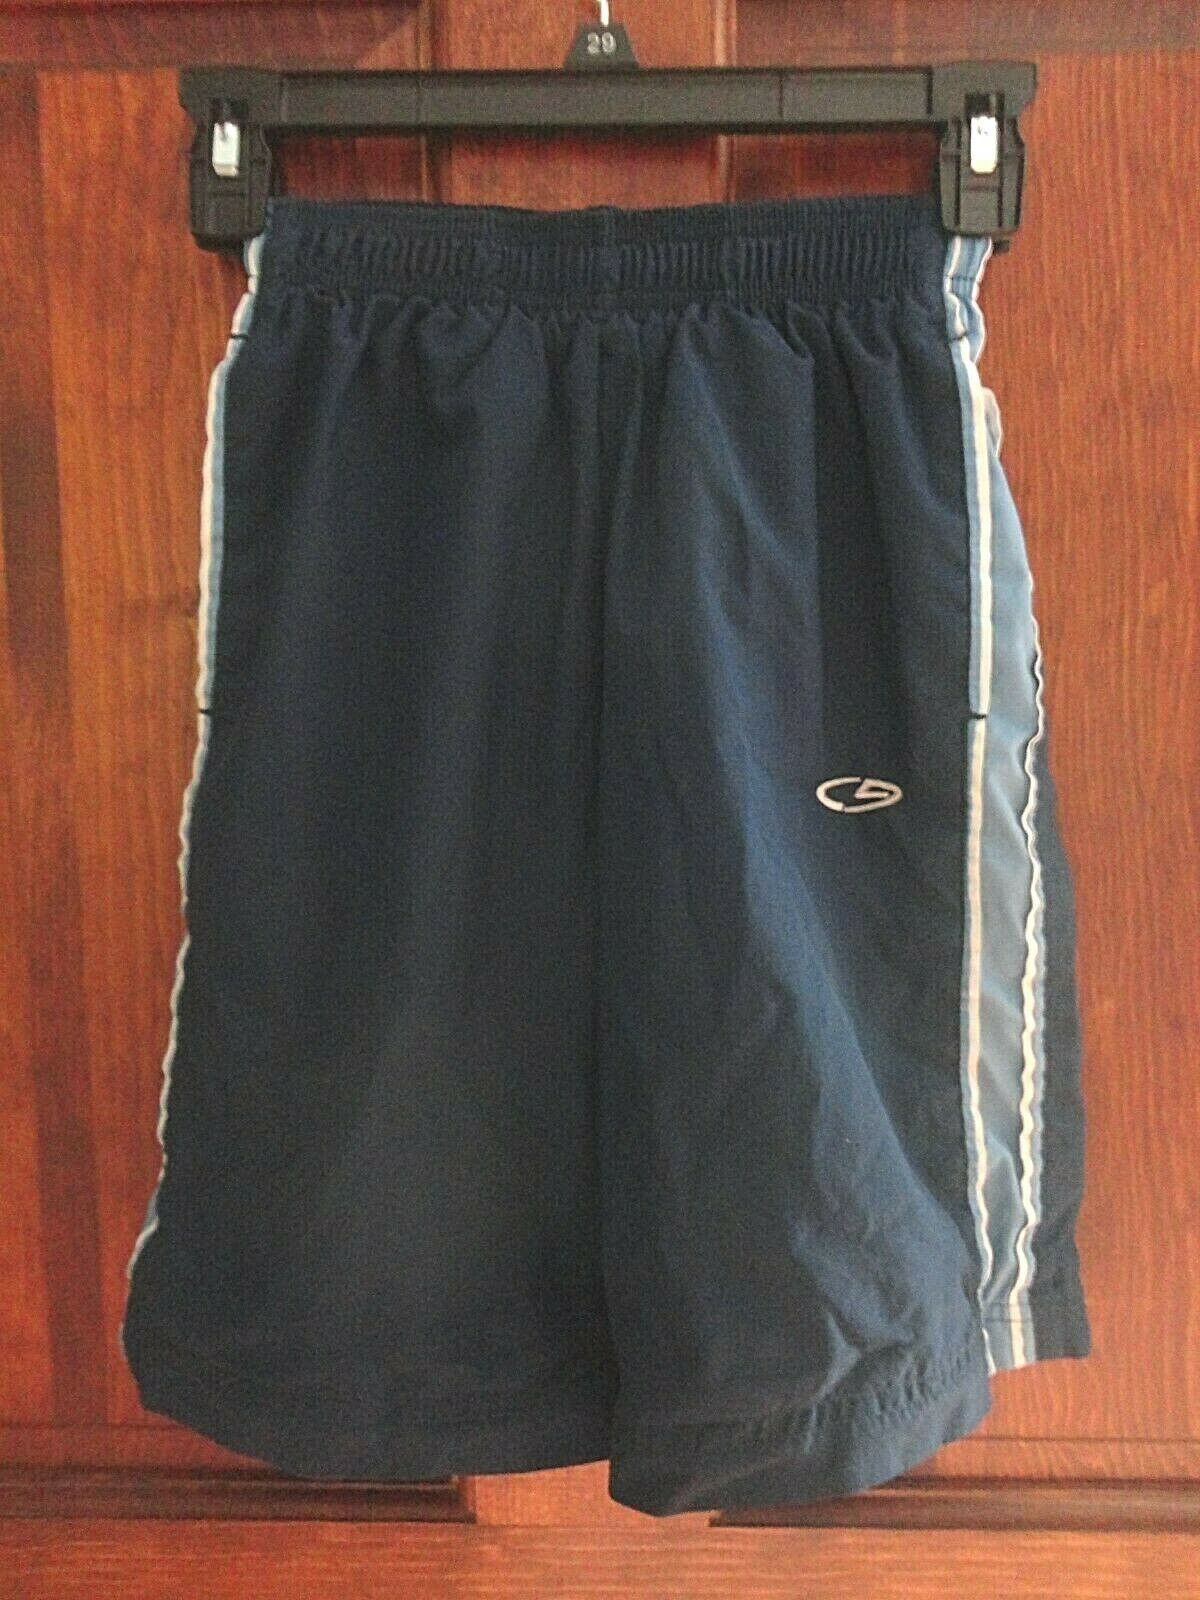 Blue boys Champion bathing suit swim size medium - $9.75